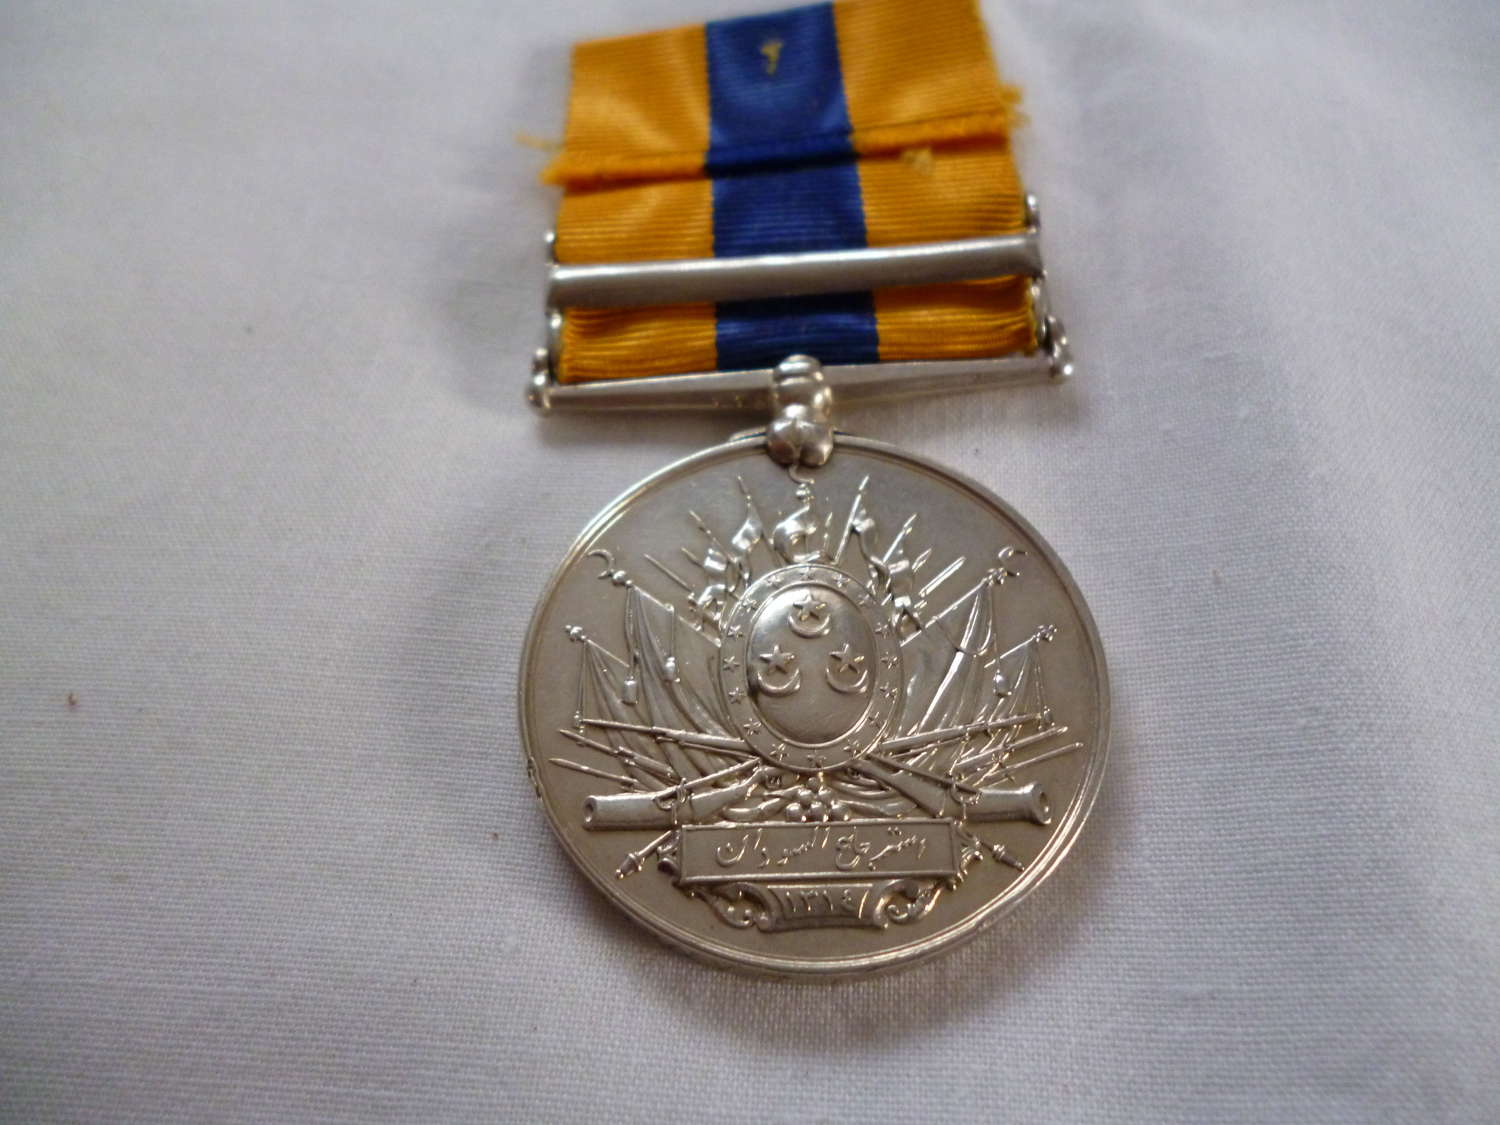 Khedives Sudan Medal